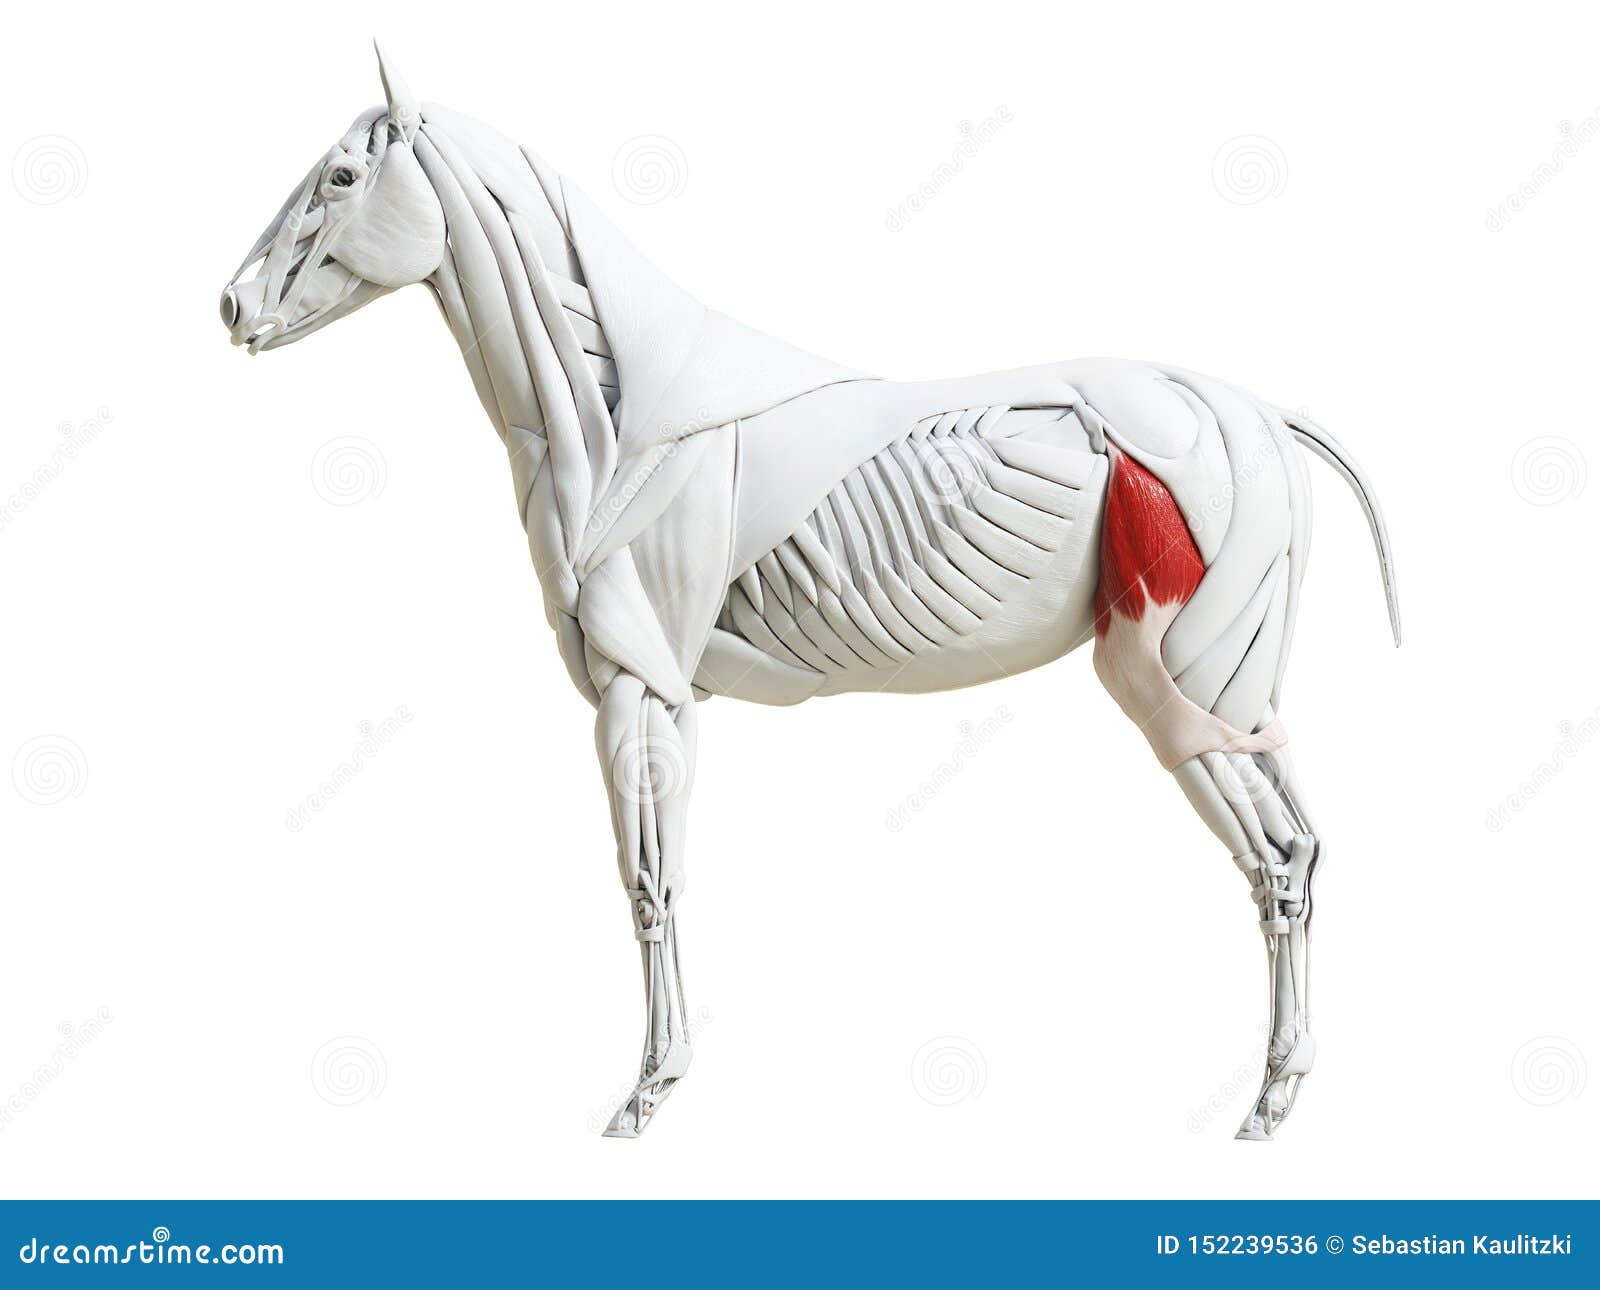 the equine muscle anatomy - tensor fascia latae